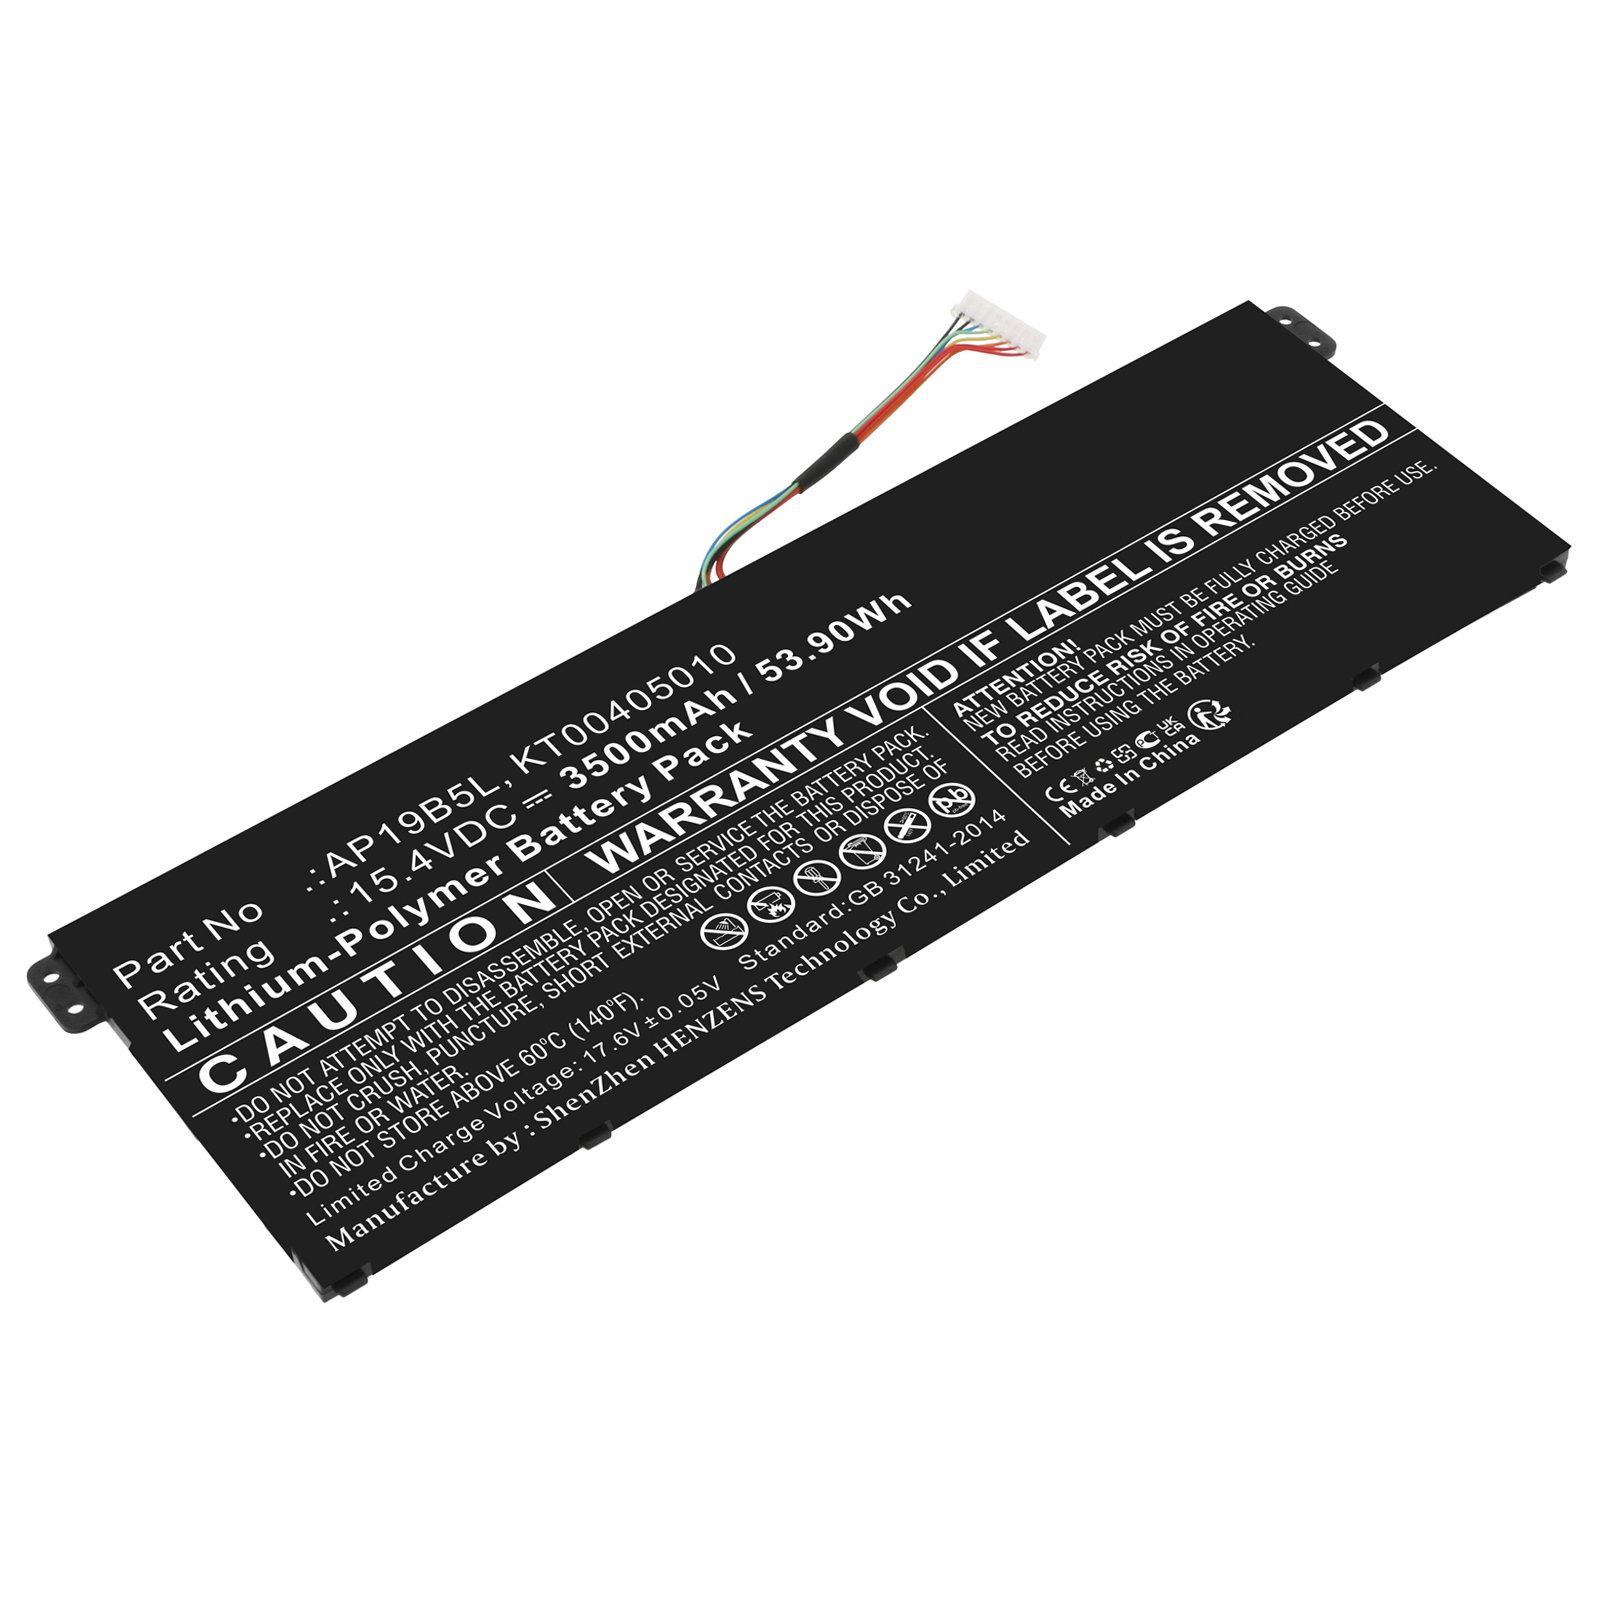 Synergy Digital Laptop Battery, Compatible with Acer AP19B5L Laptop Battery (Li-Pol, 15.4V, 3500mAh)